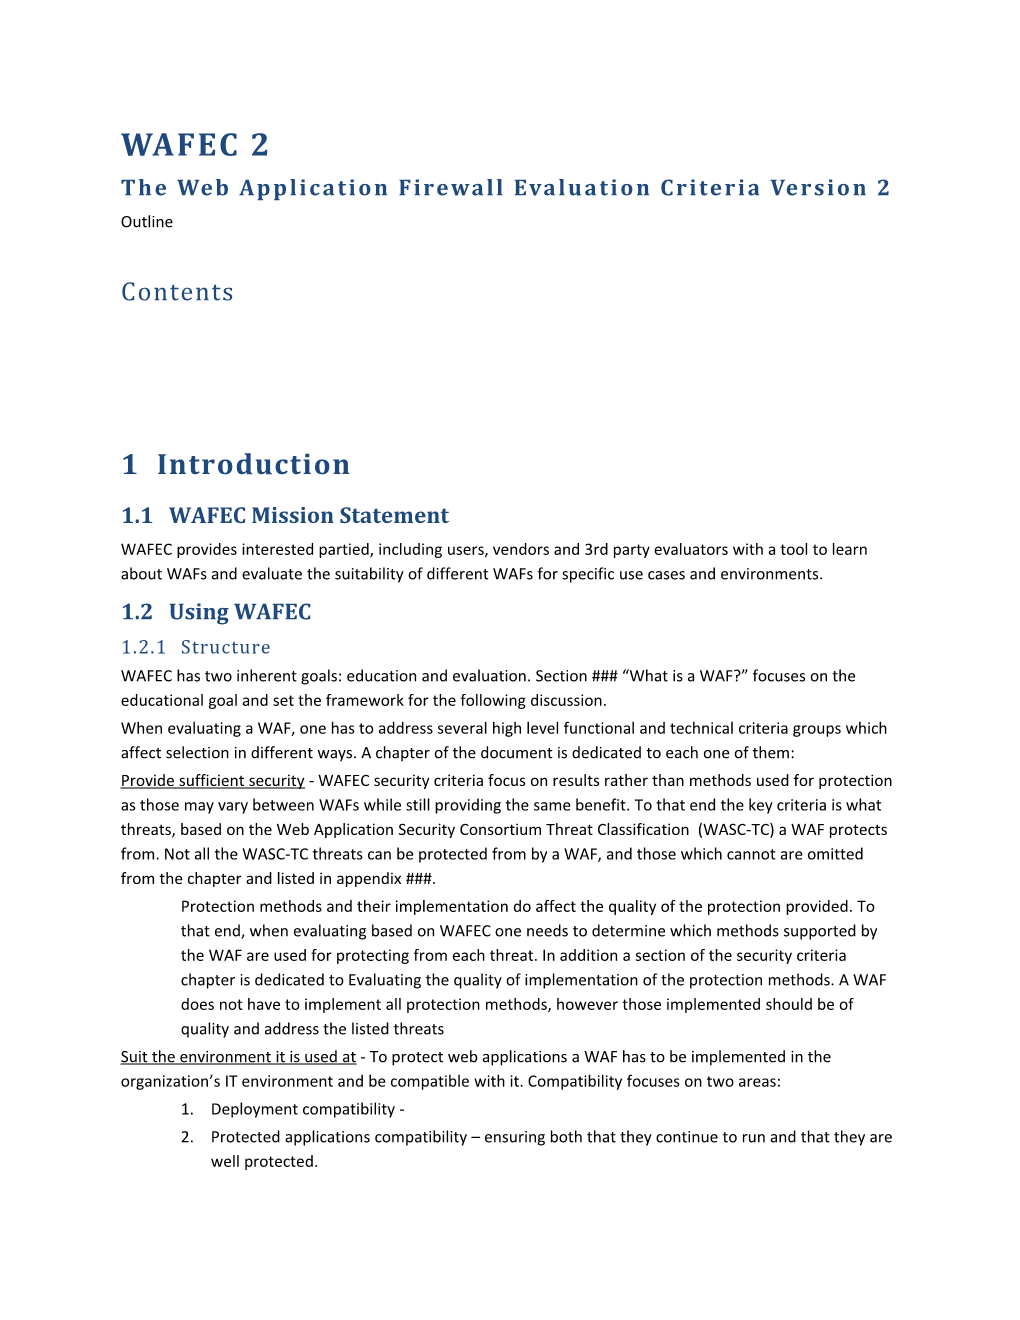 The Web Application Firewall Evaluation Criteria Version 2